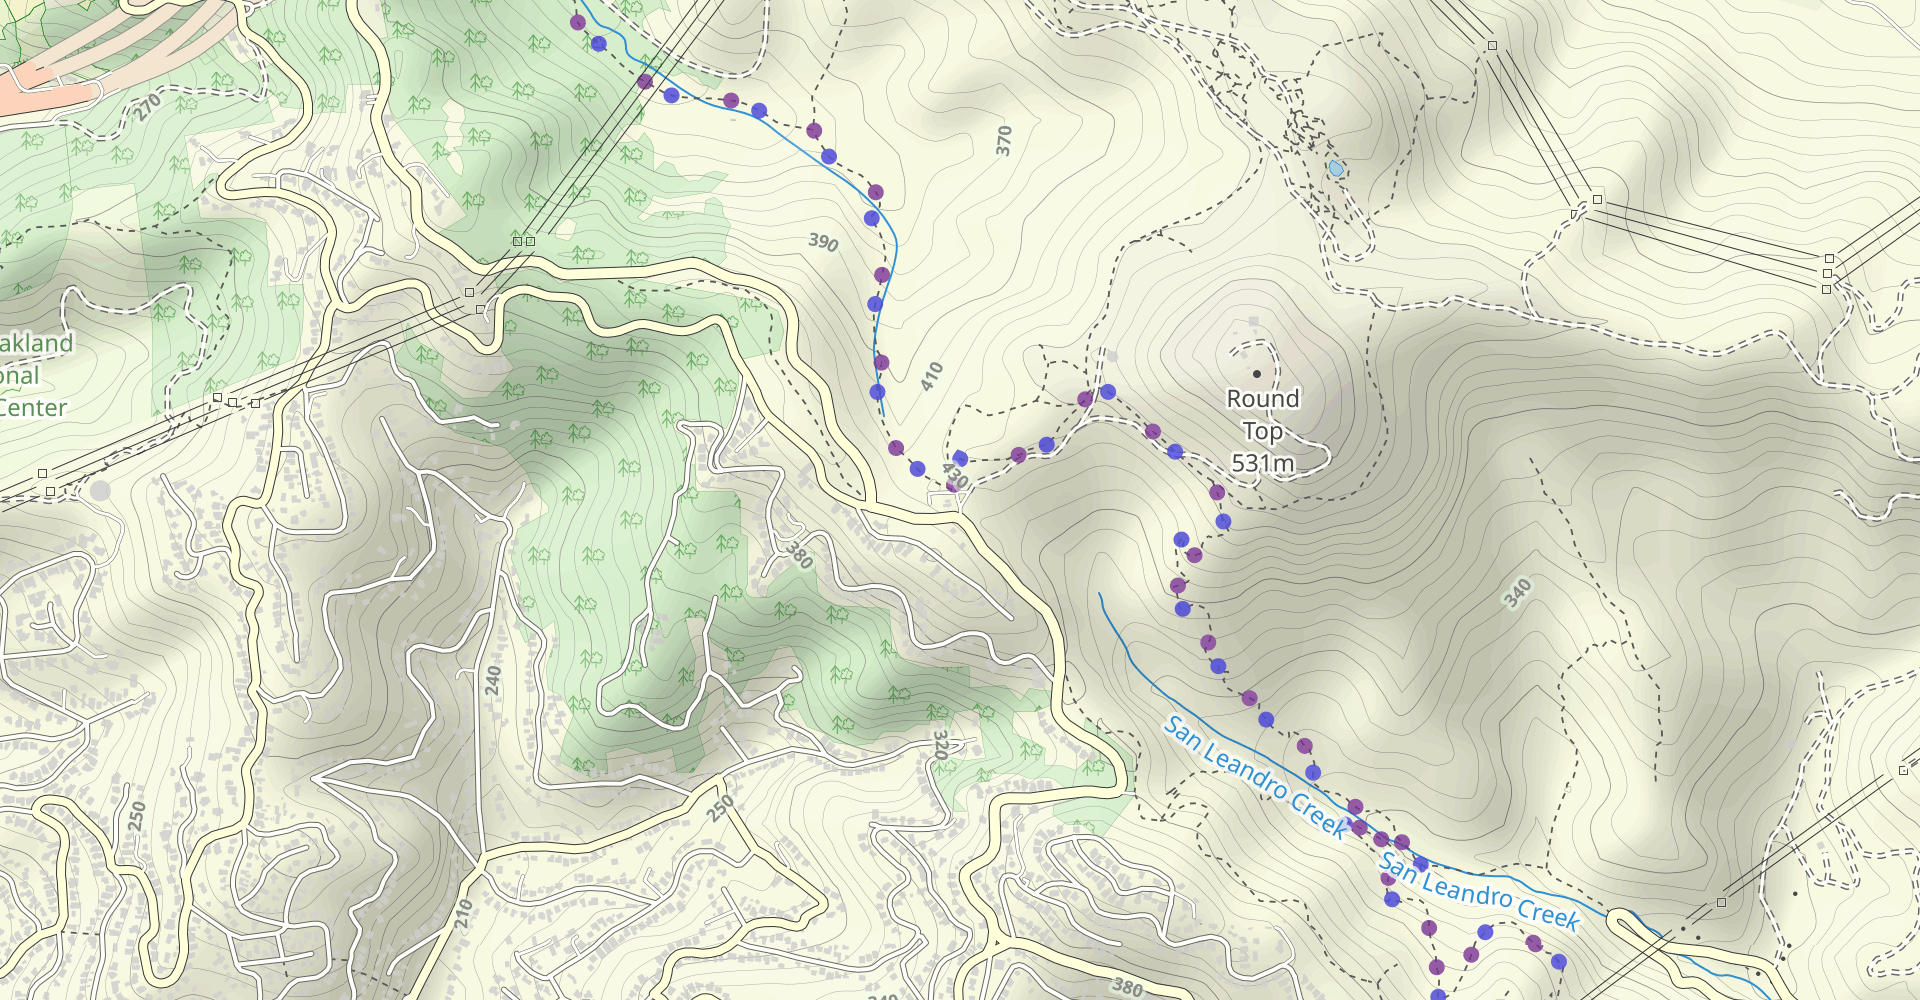 Bay Area Ridge, Round Top Loop, and Volcanic Trail Loop